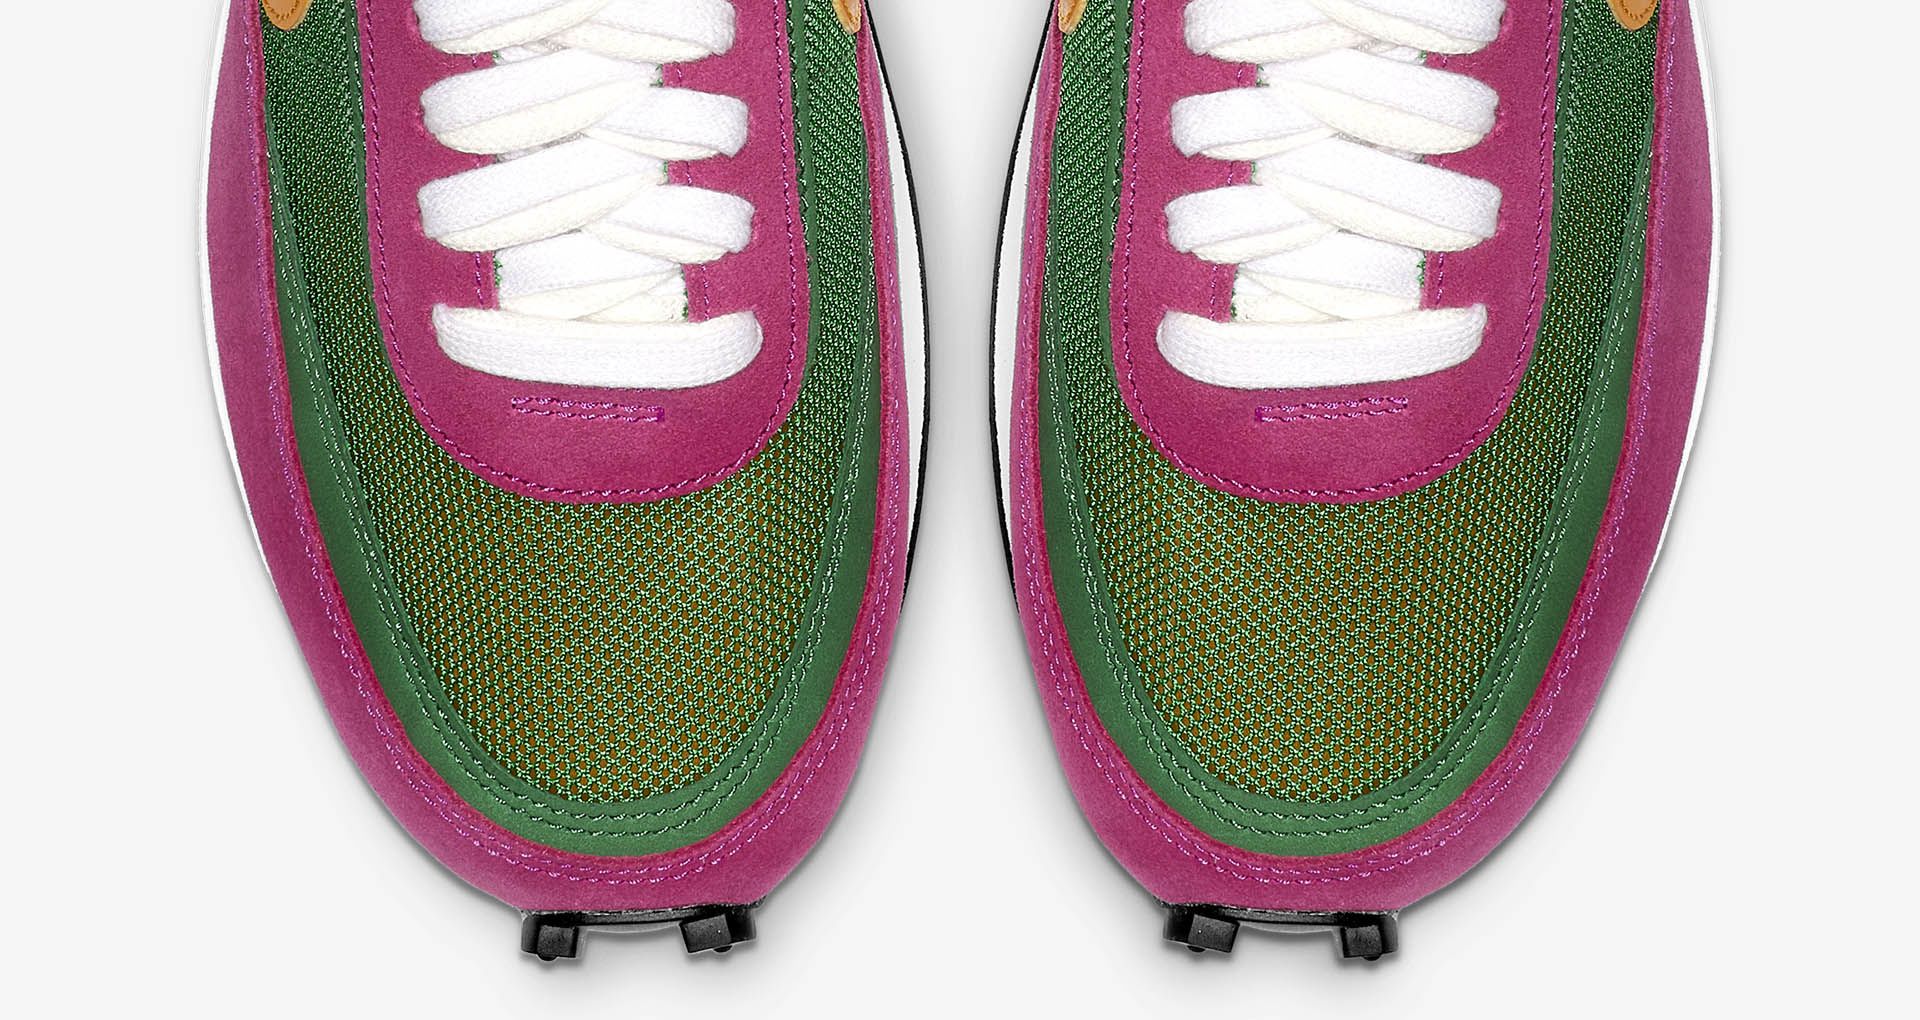 sacai x Nike LDWaffle 'Pine Green' Release Date. Nike SNKRS US